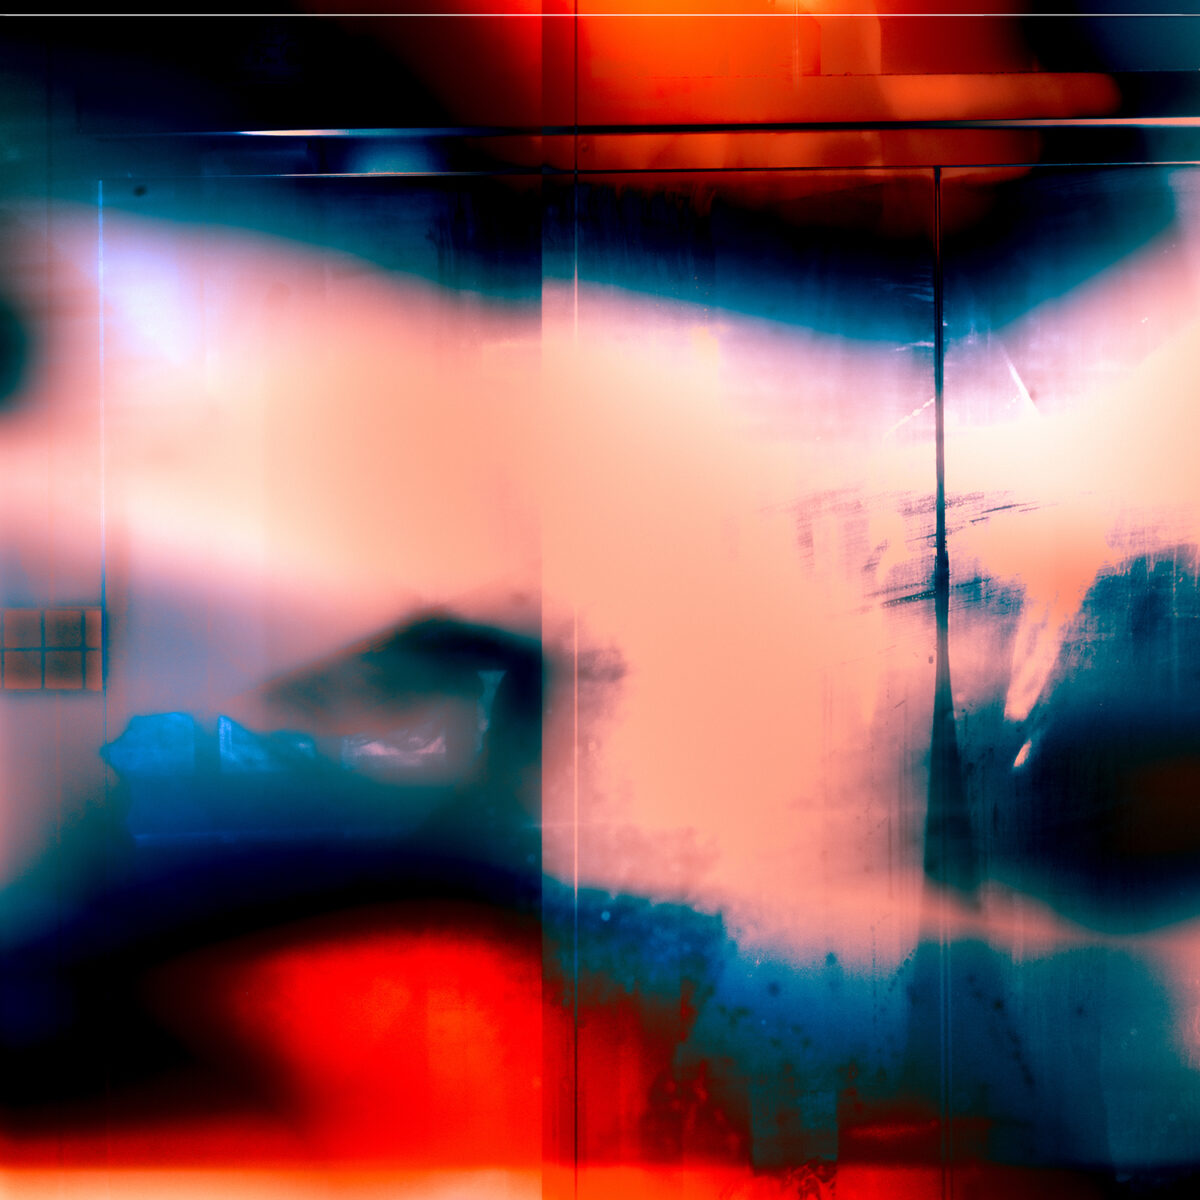 Joris Graaf, The Intensity of Emotion, Digitally processed photograph, 2020